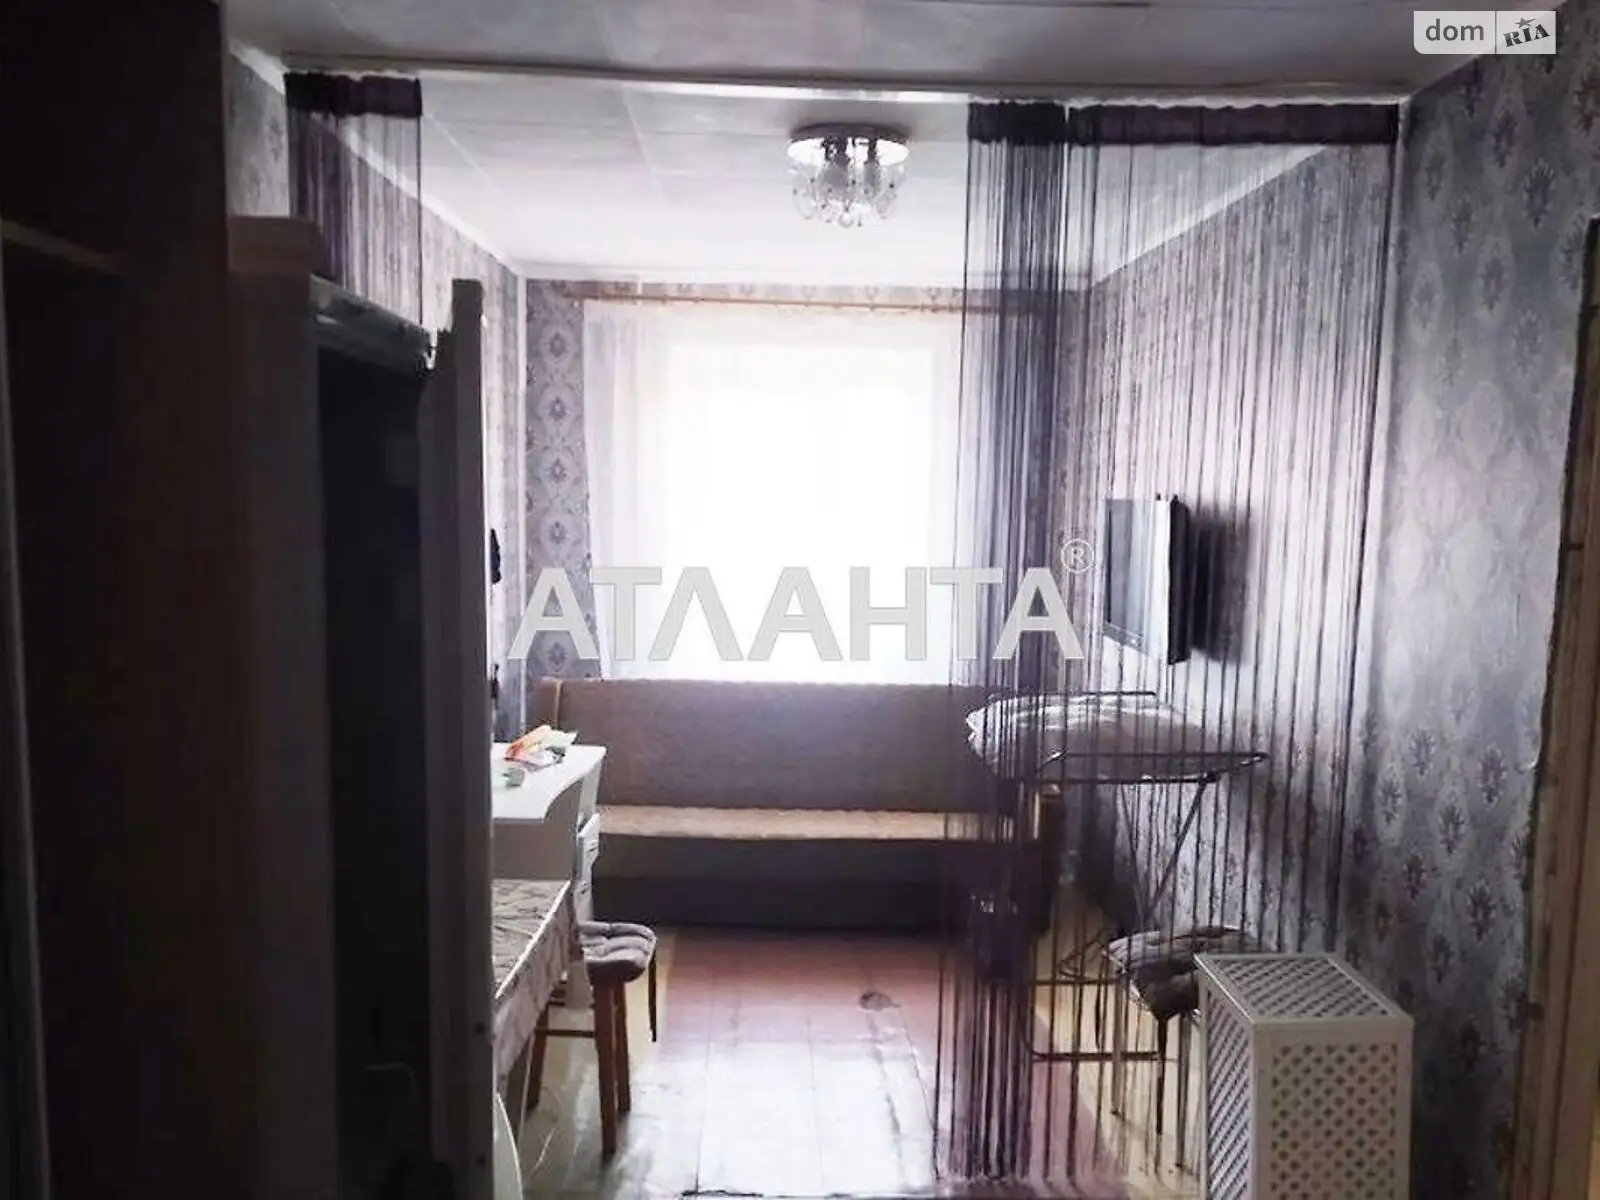 Продается комната 36 кв. м в Одессе, цена: 24000 $ - фото 1